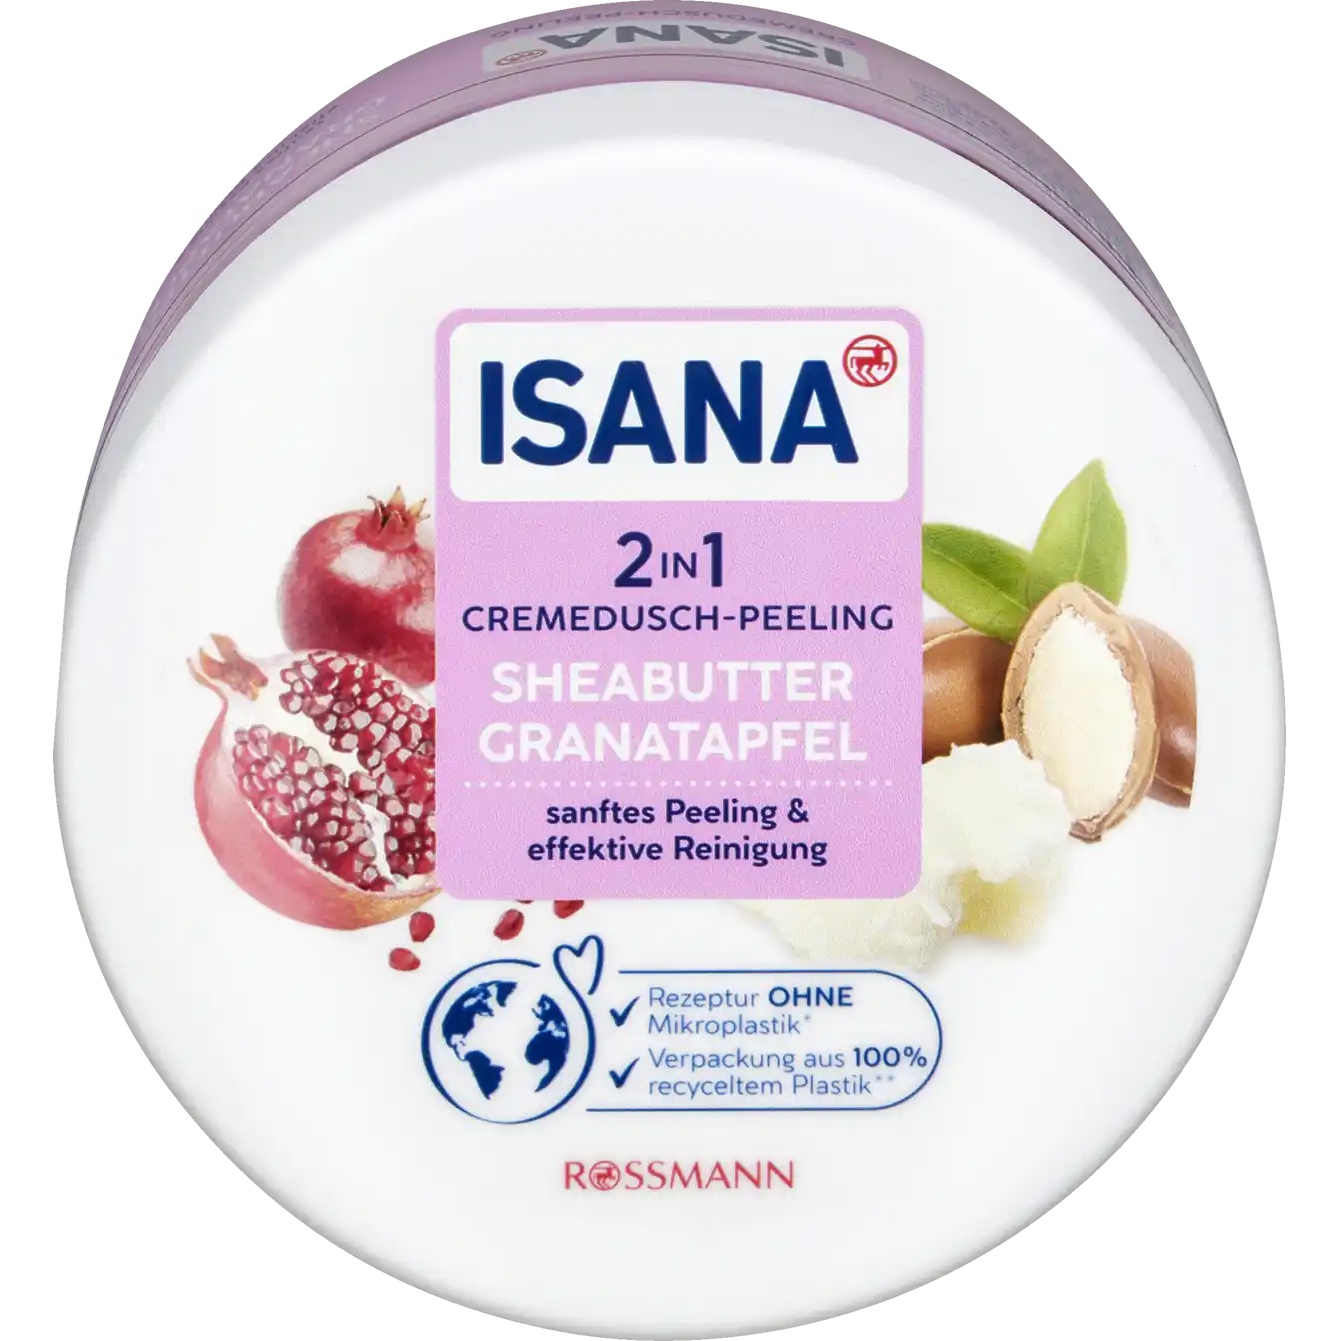 Isana 2in1 Cremedusch-Peeling Sheabutter Granatapfel